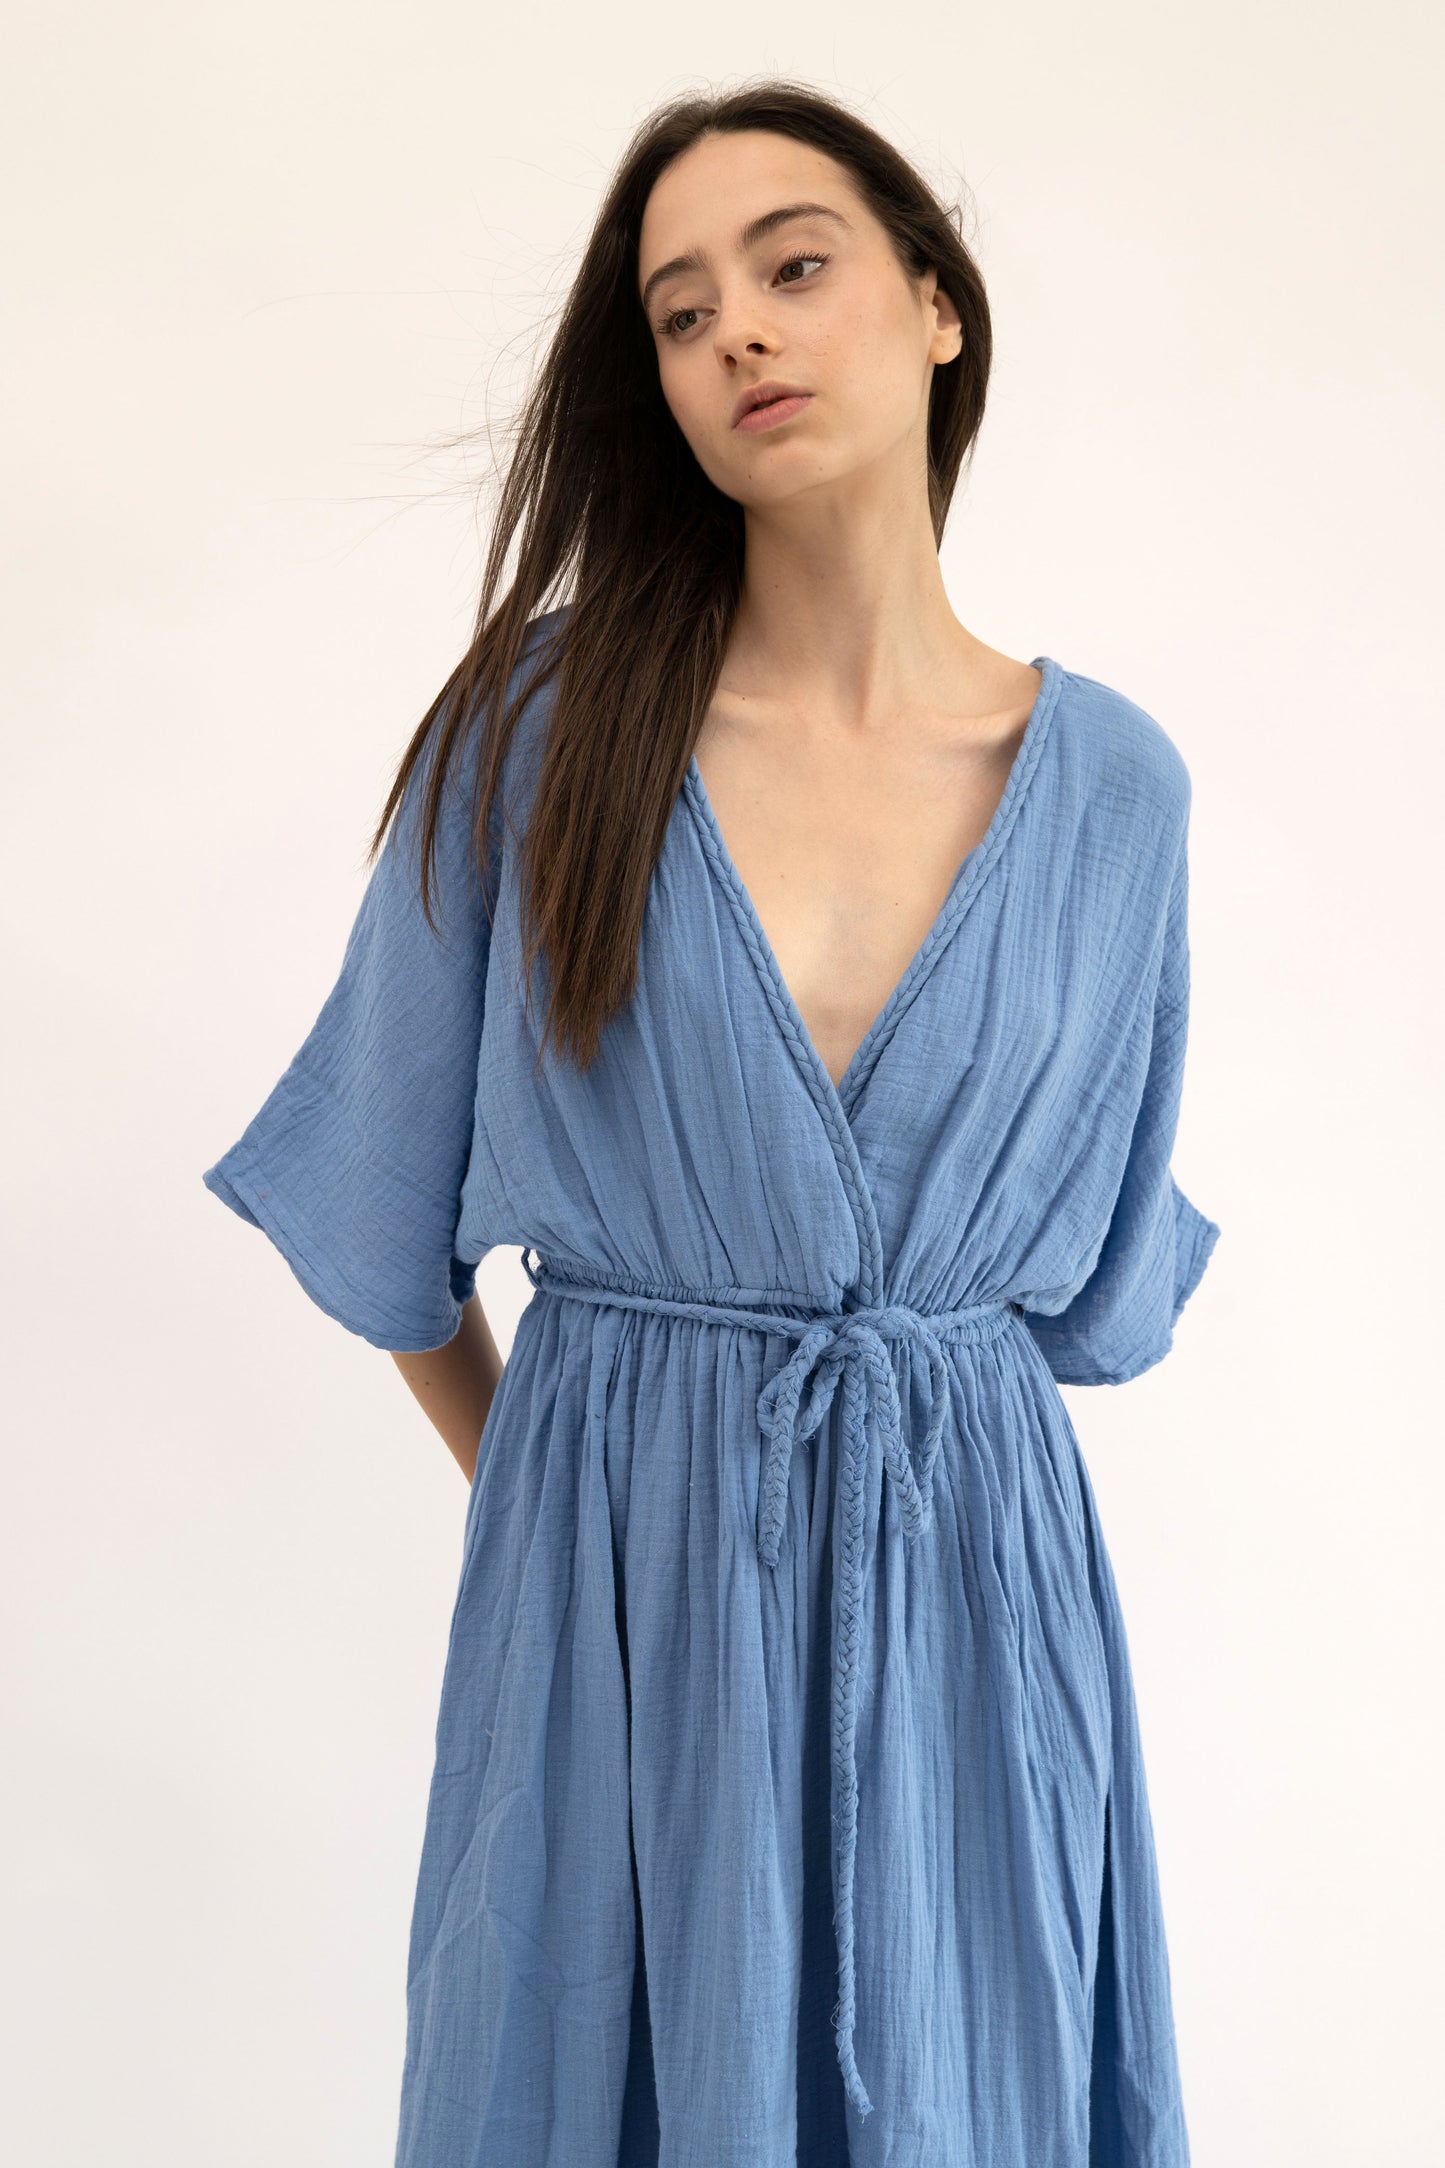 CHLOE - BLUE braided dress